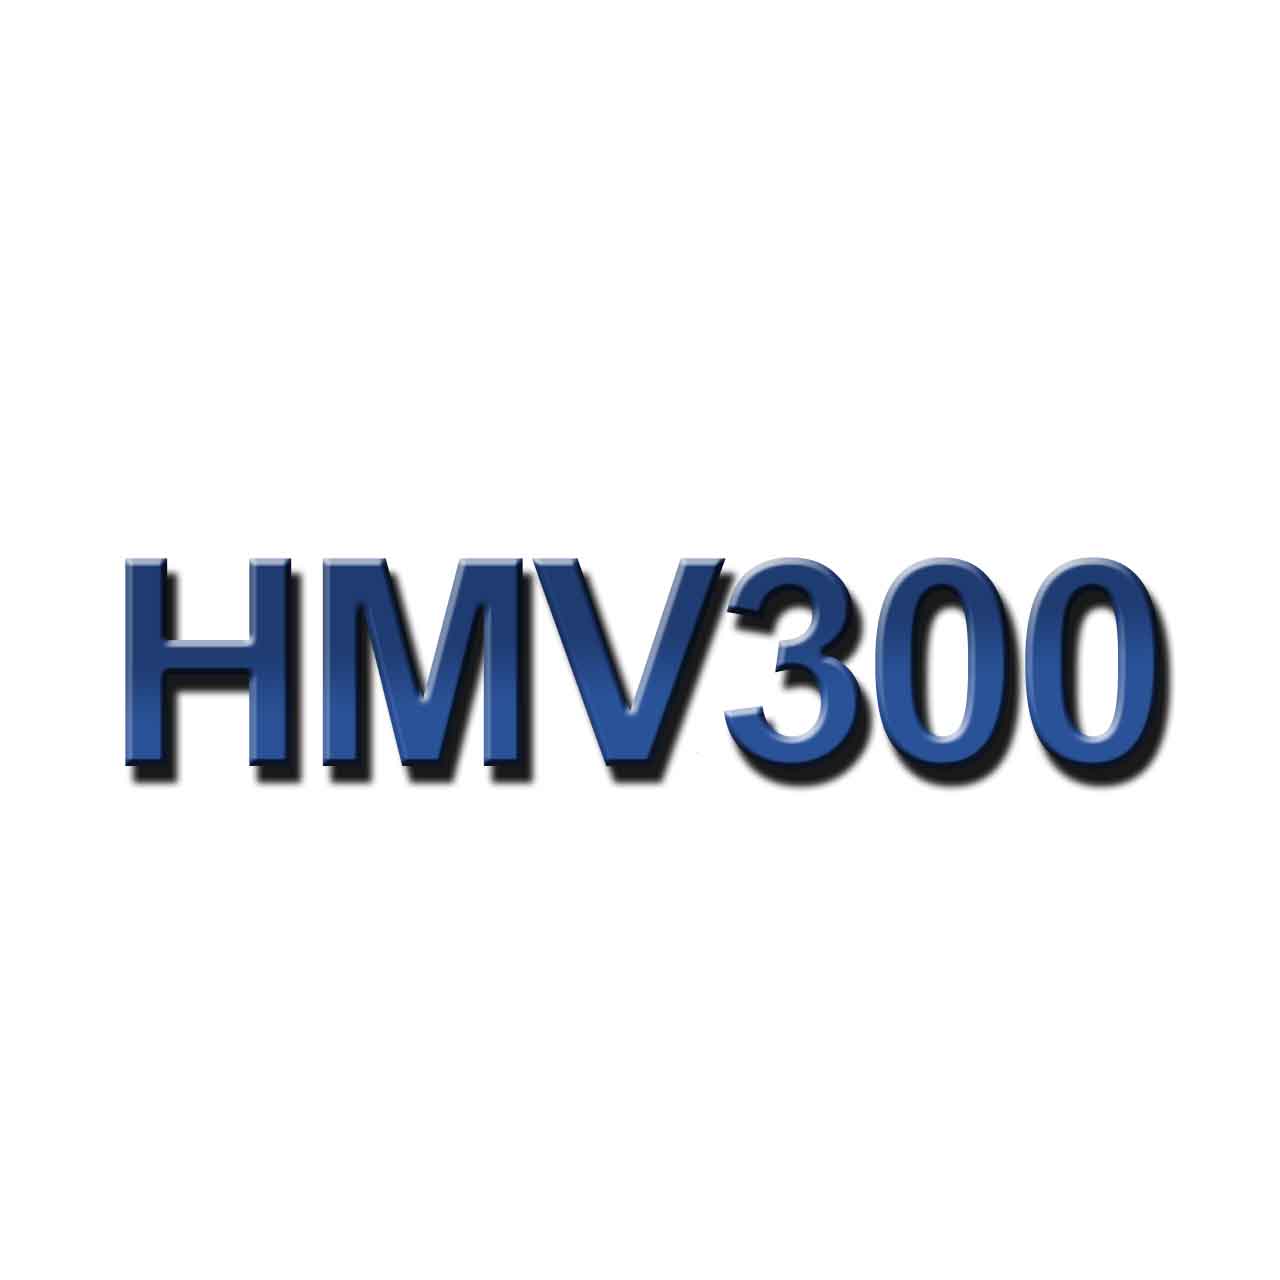 HMV300